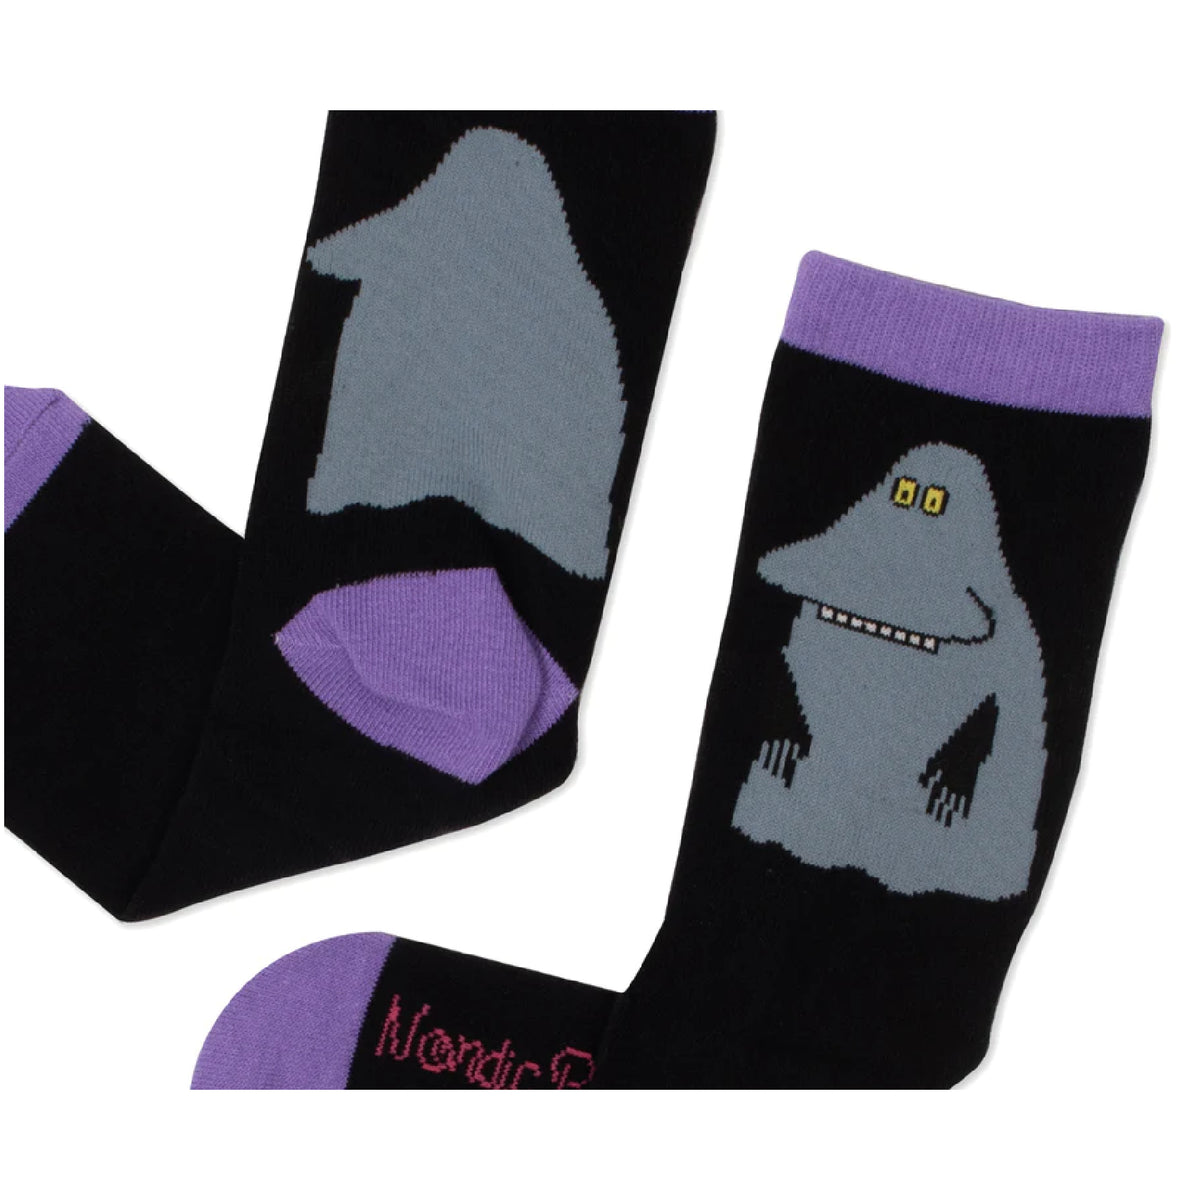 Moomin Socks The Groke Black